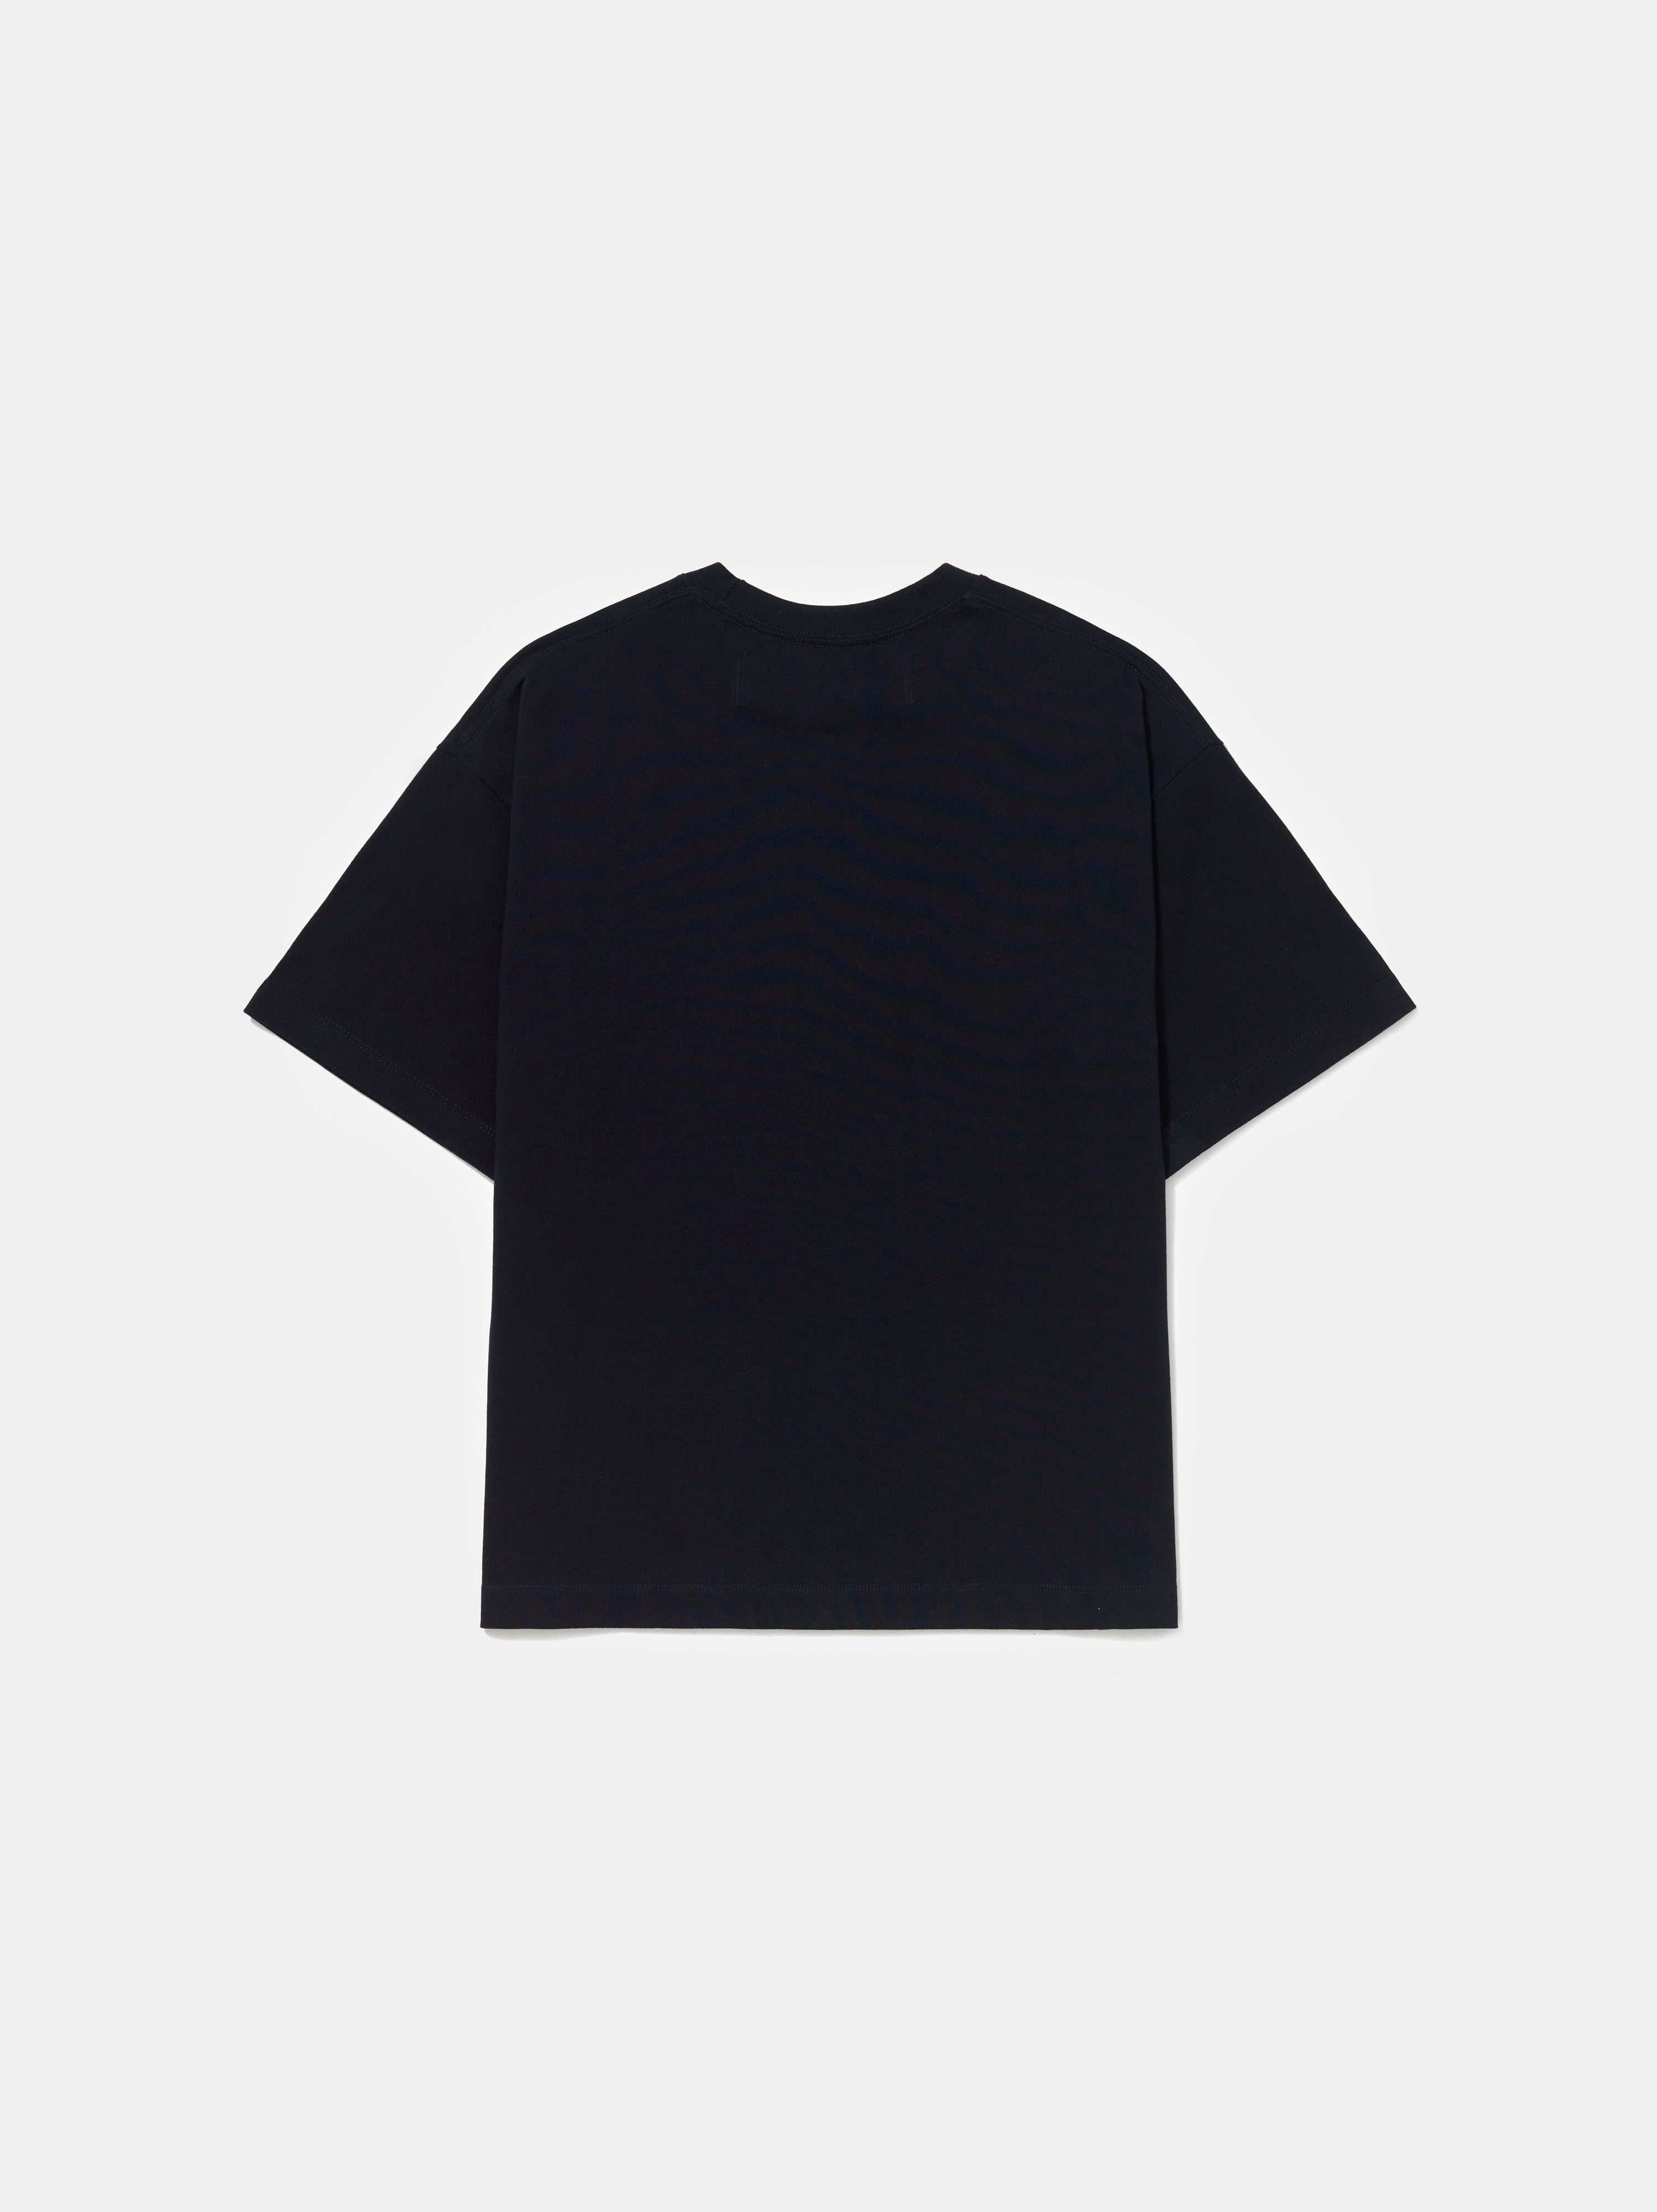 Dada T-Shirt - Black